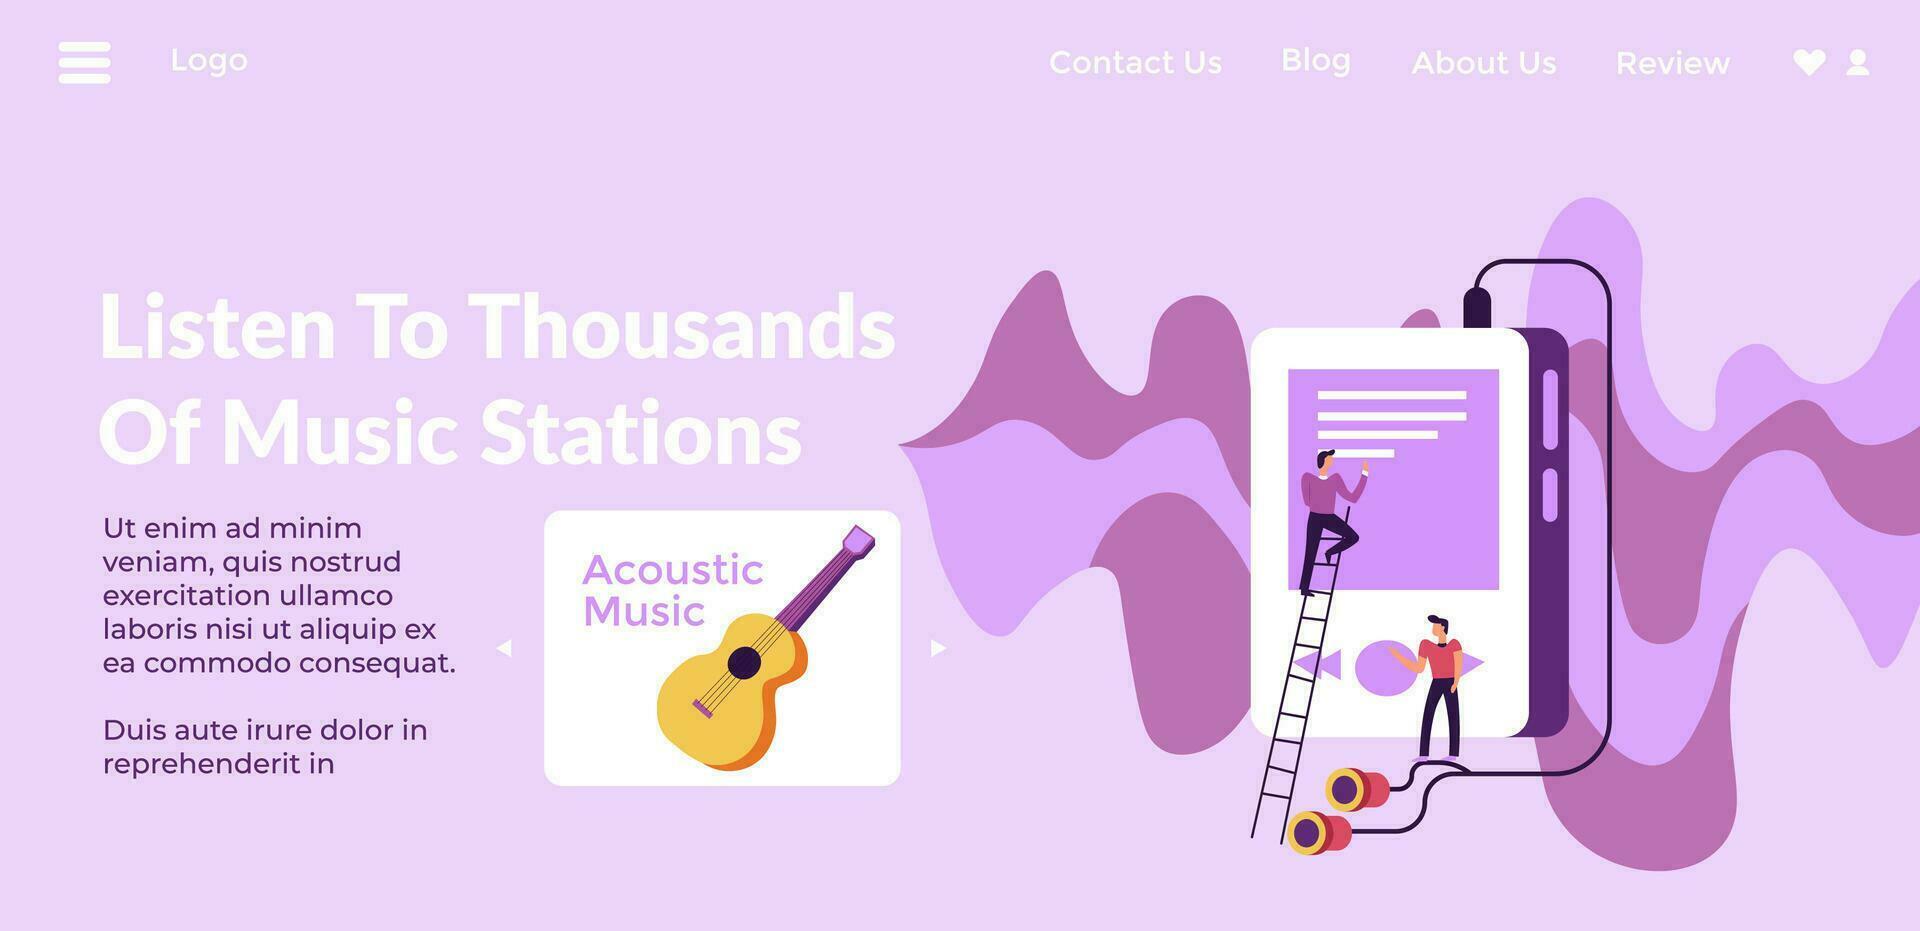 escucha a miles de música estaciones sitio web vector